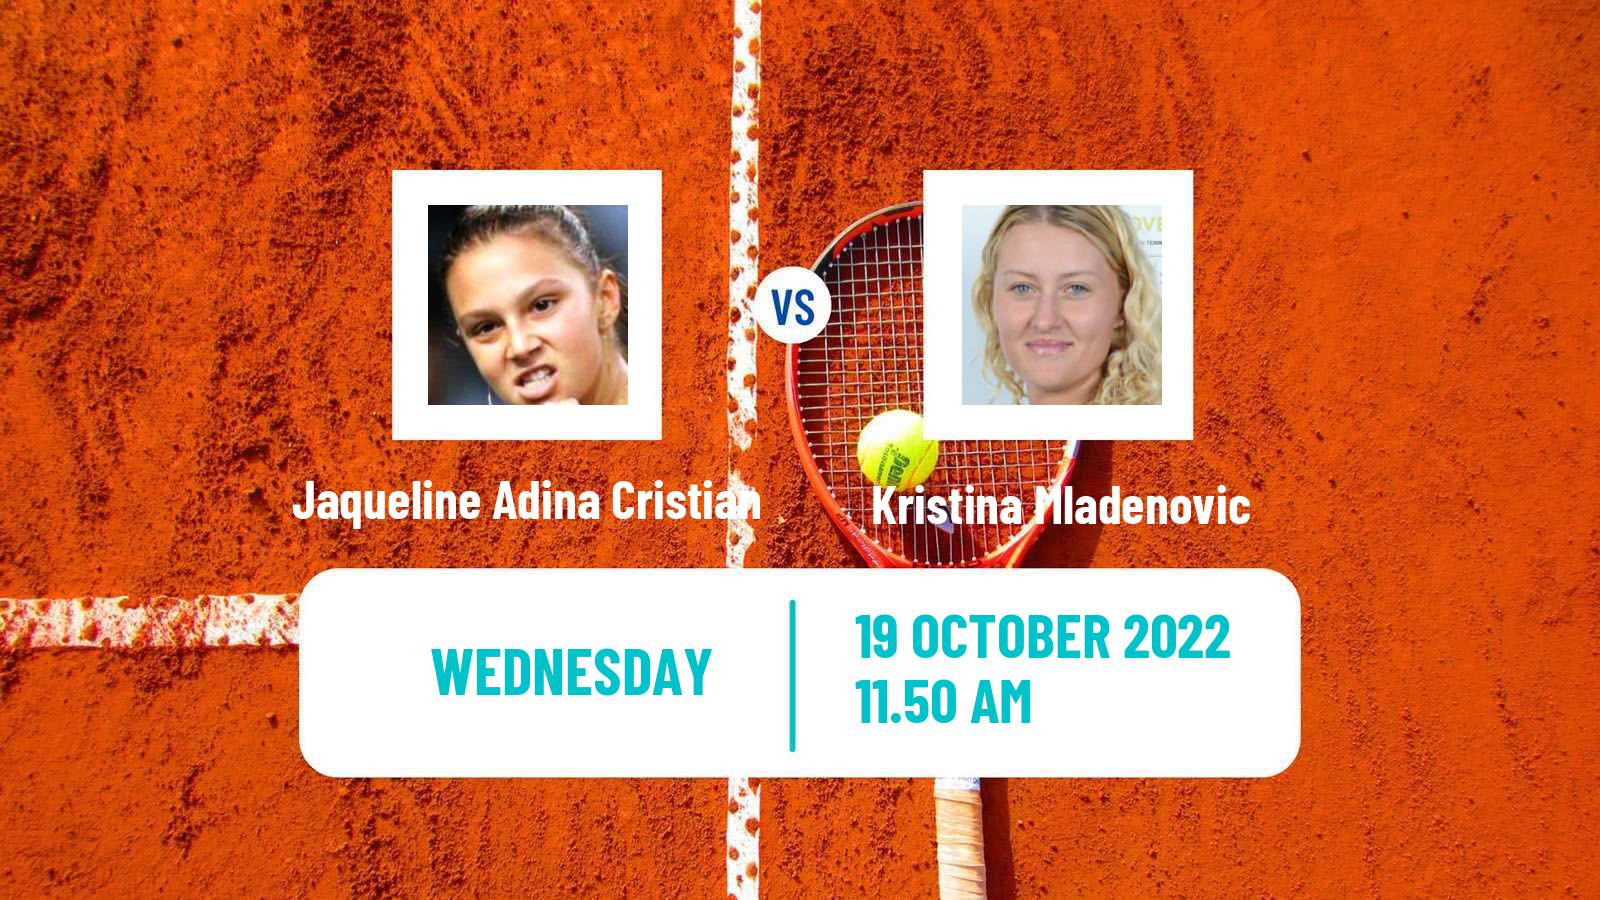 Tennis ATP Challenger Jaqueline Adina Cristian - Kristina Mladenovic